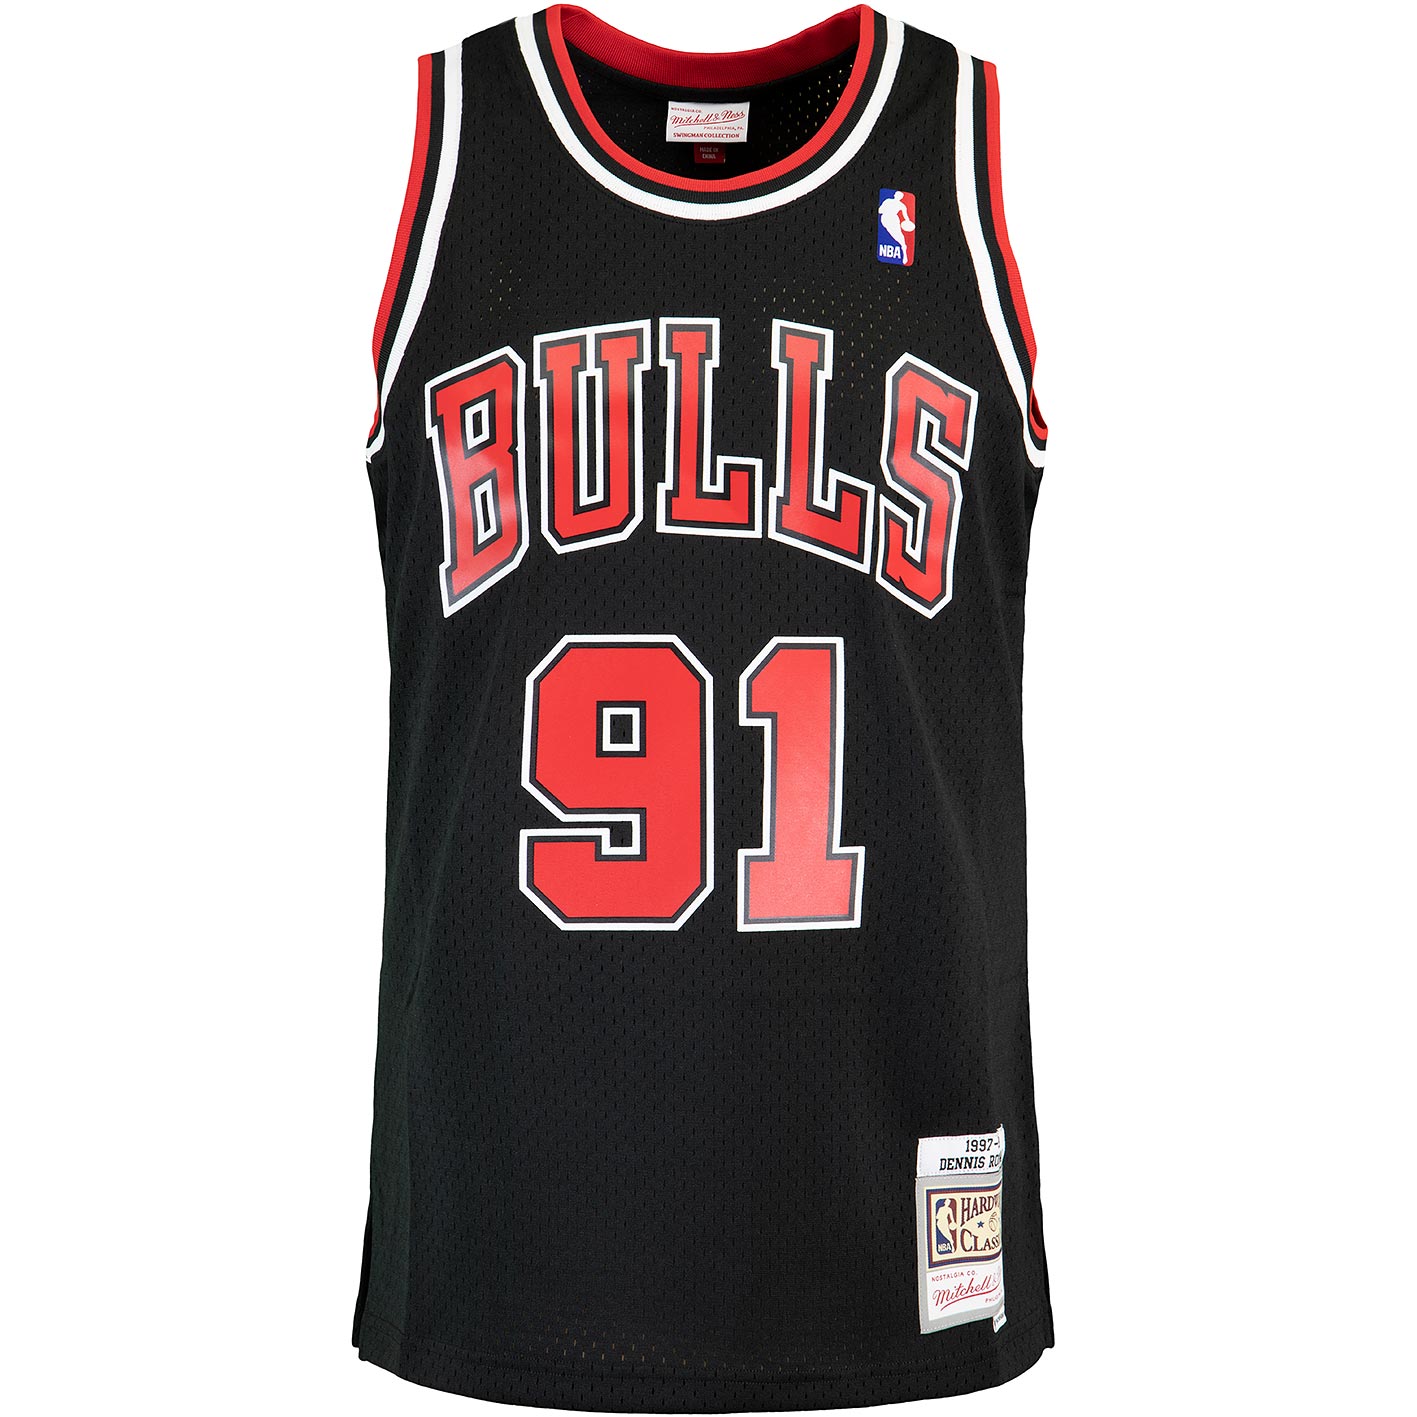 ☆ Mitchell & Ness Swingman Dennis Rodman Chicago Bulls 97/98 Trikot schwarz  - hier bestellen!